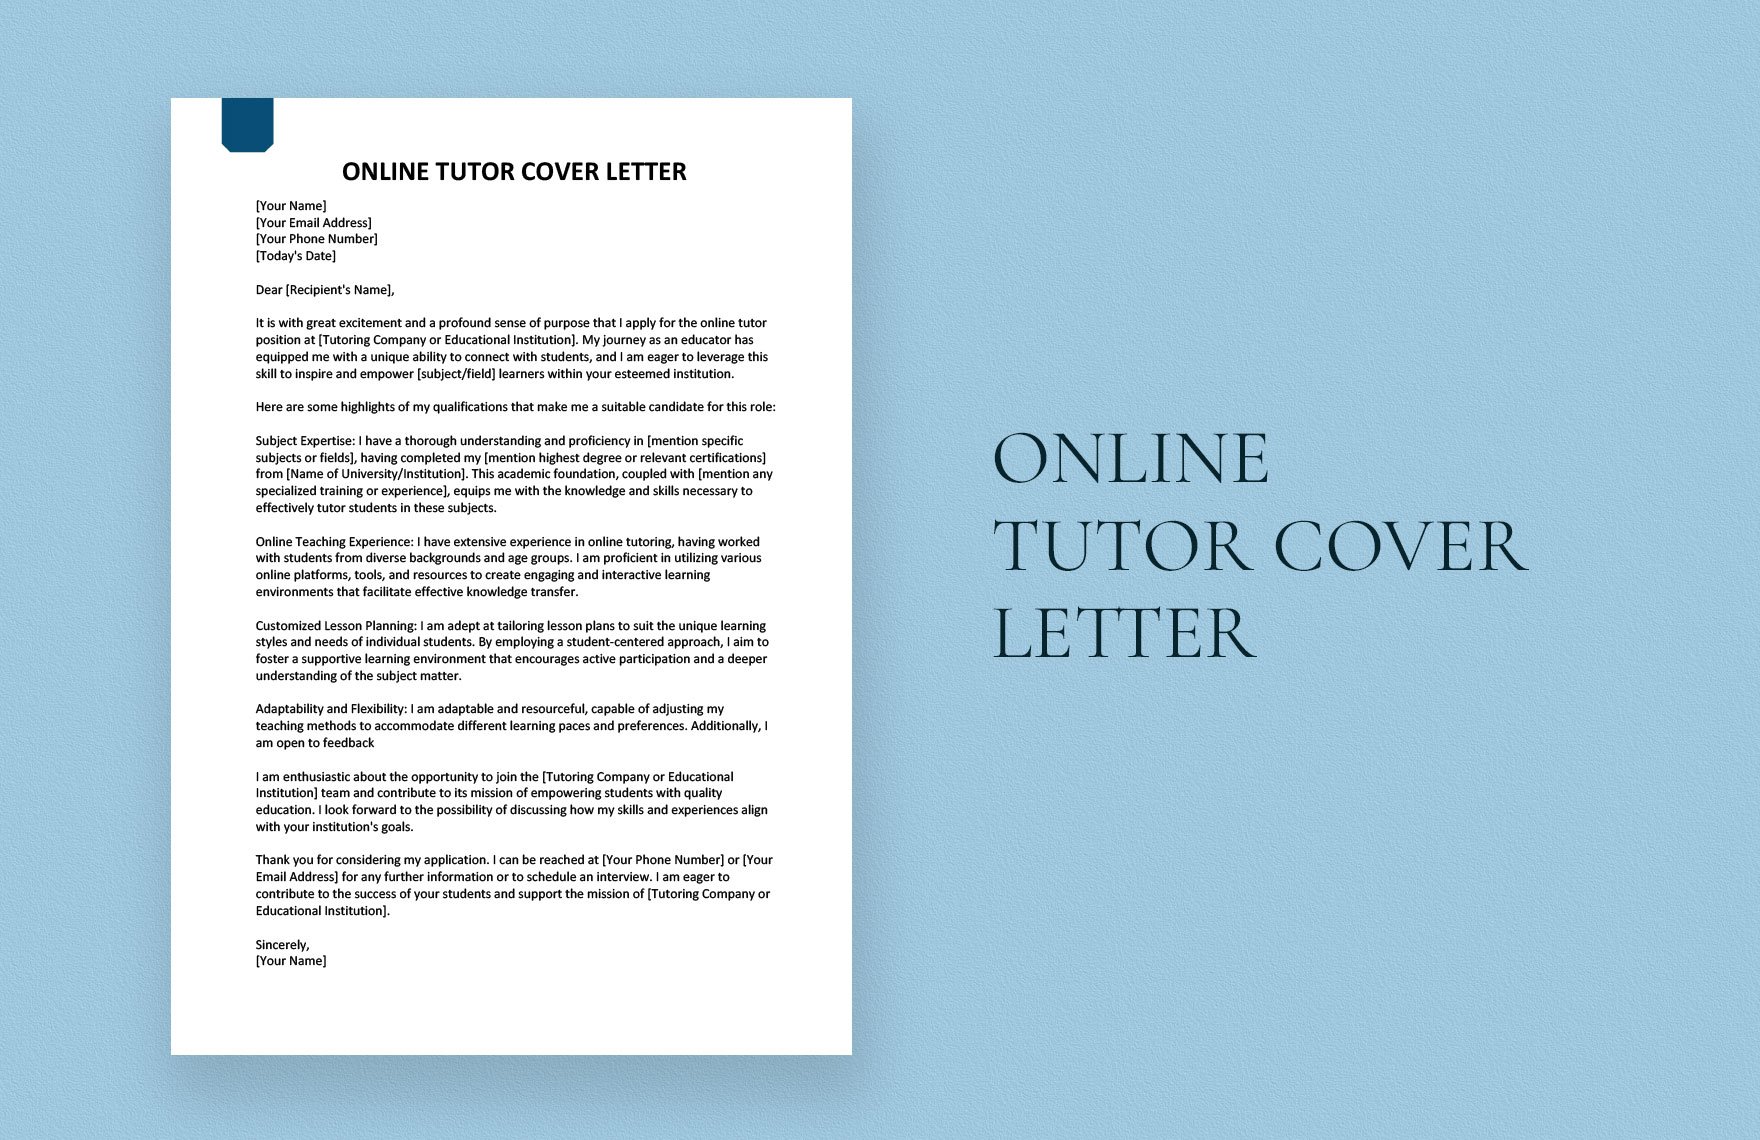 Online Tutor Cover Letter in Word, Google Docs